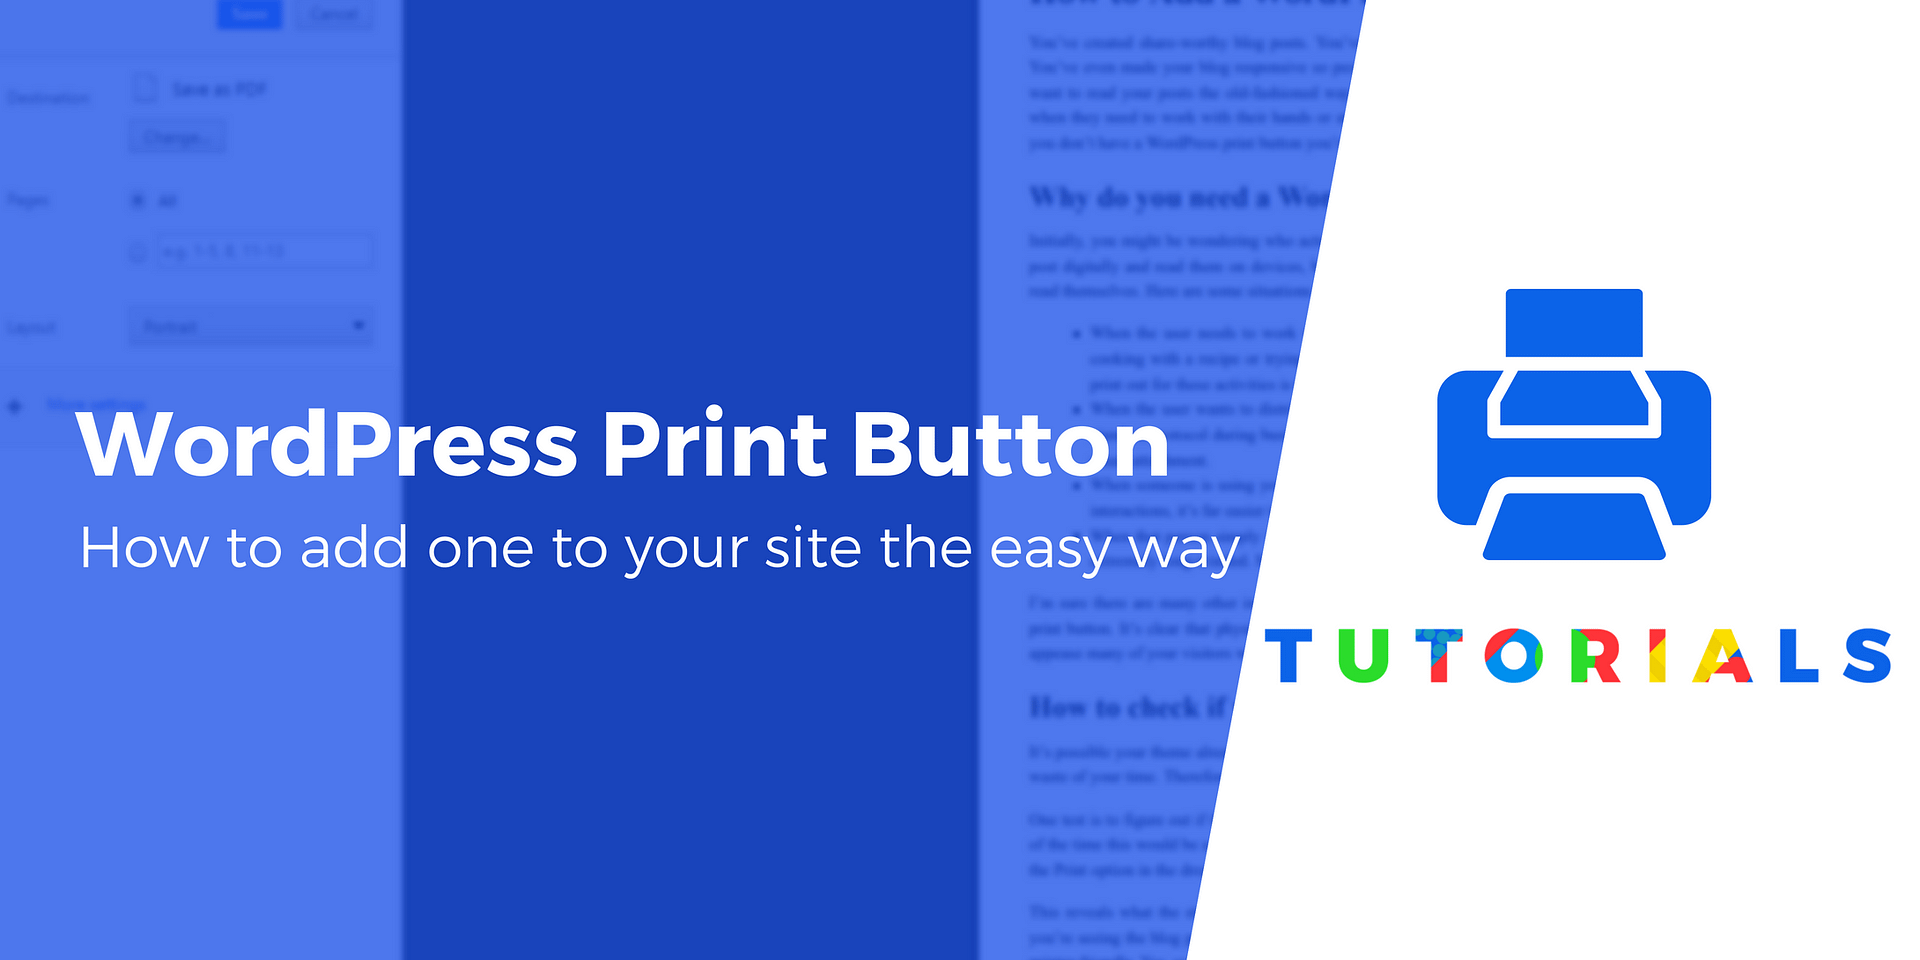 WordPress Print Button: Add One and Be Printer-Friendly